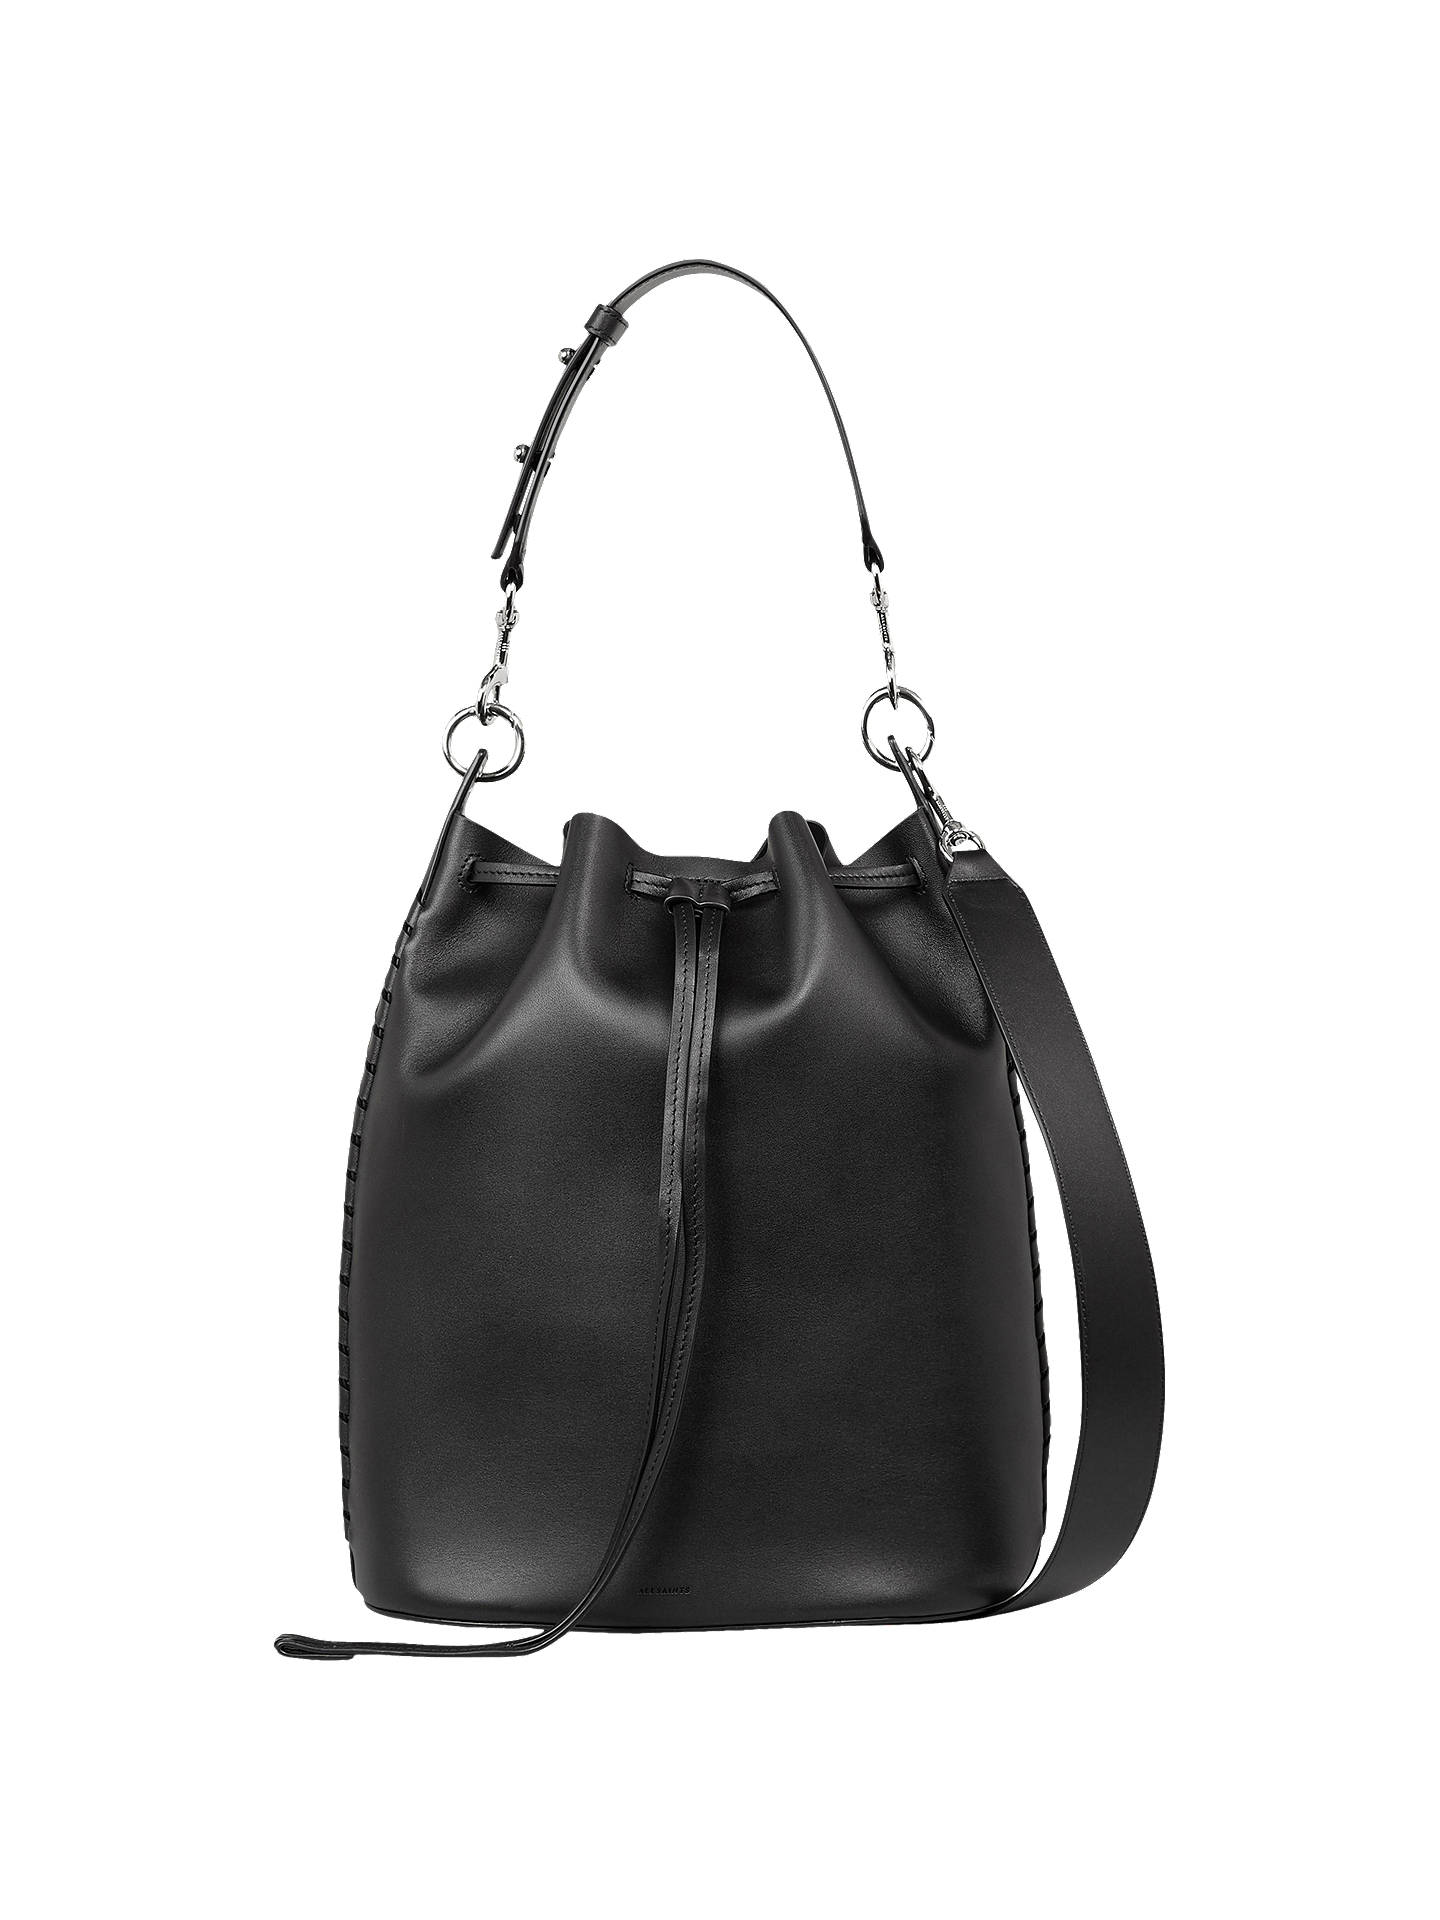 AllSaints Ray Leather Bucket Bag, Black at John Lewis & Partners